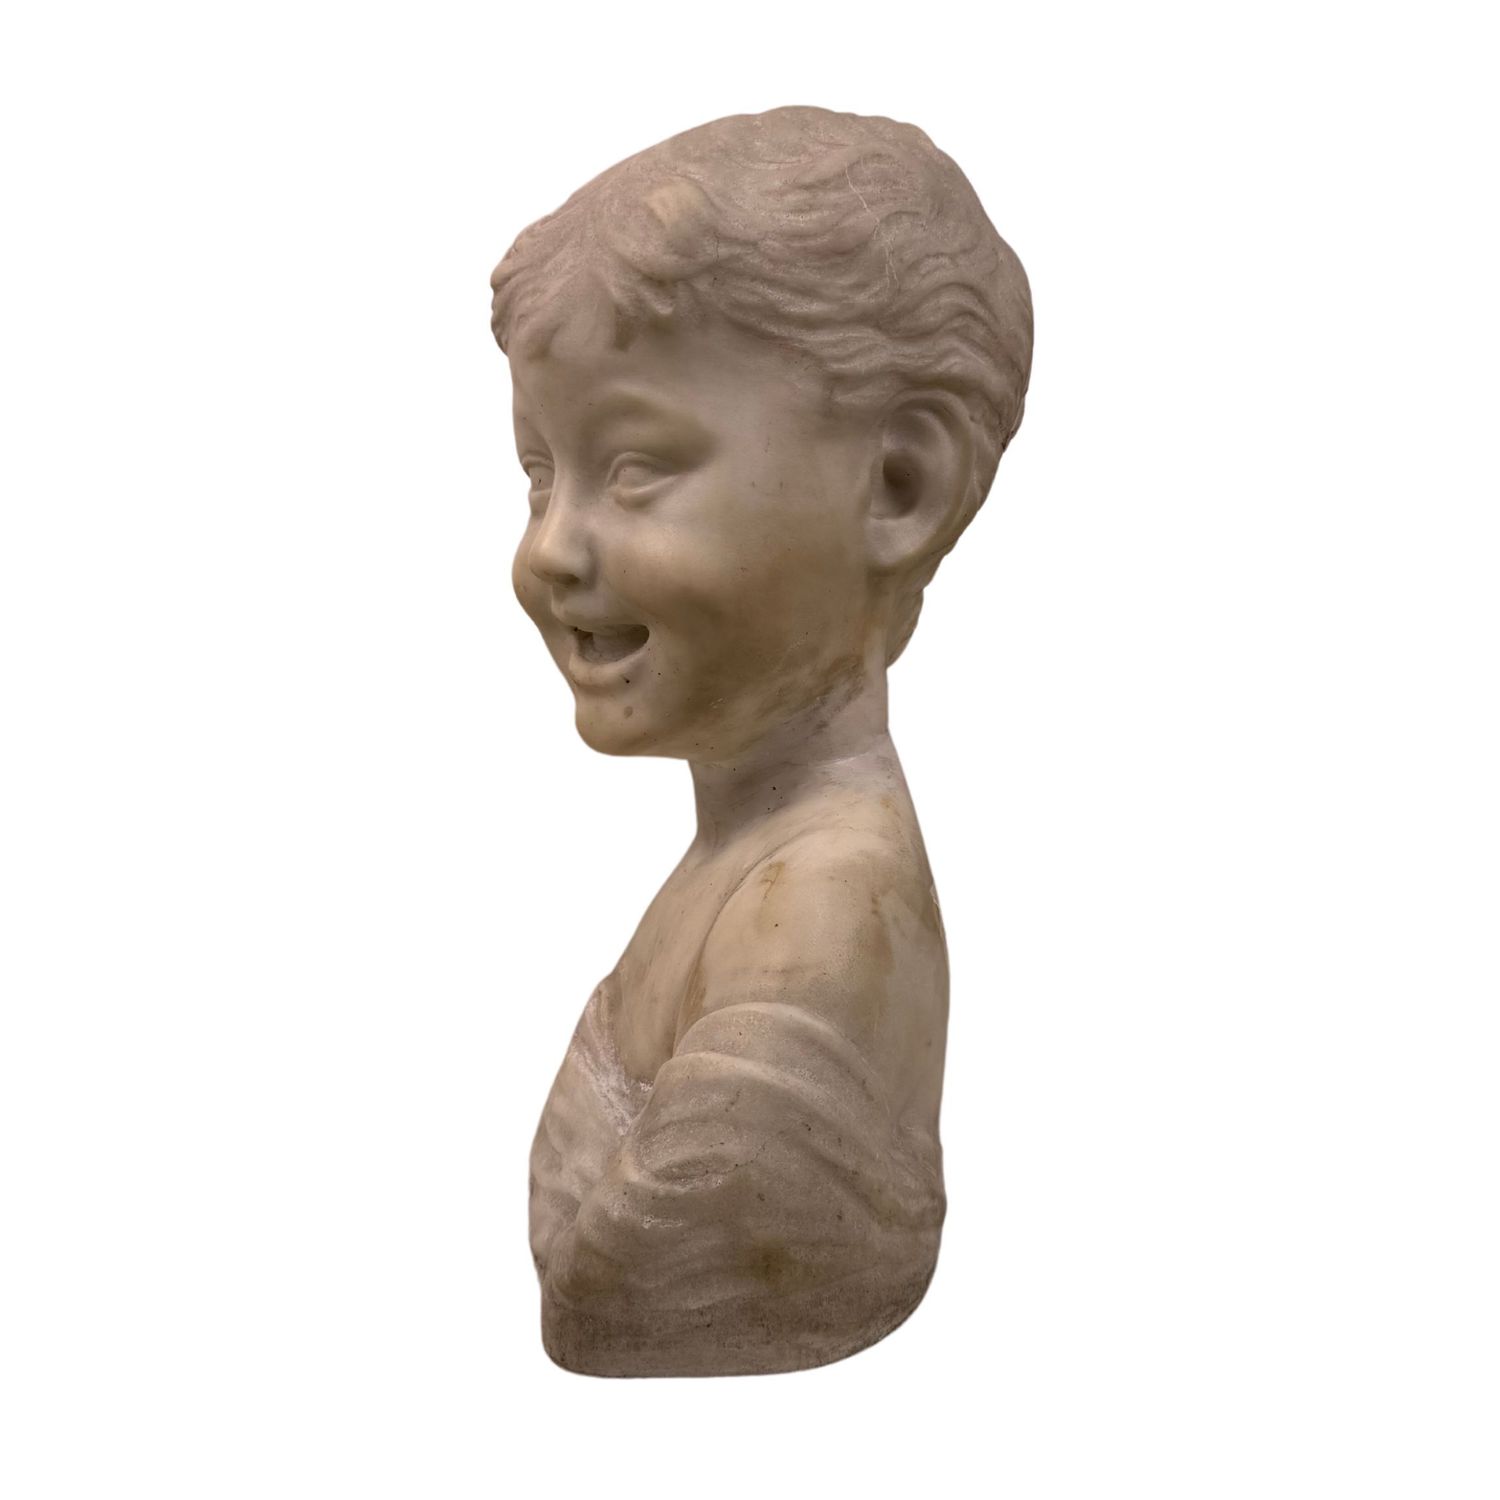 Smiling child - Image 4 of 6